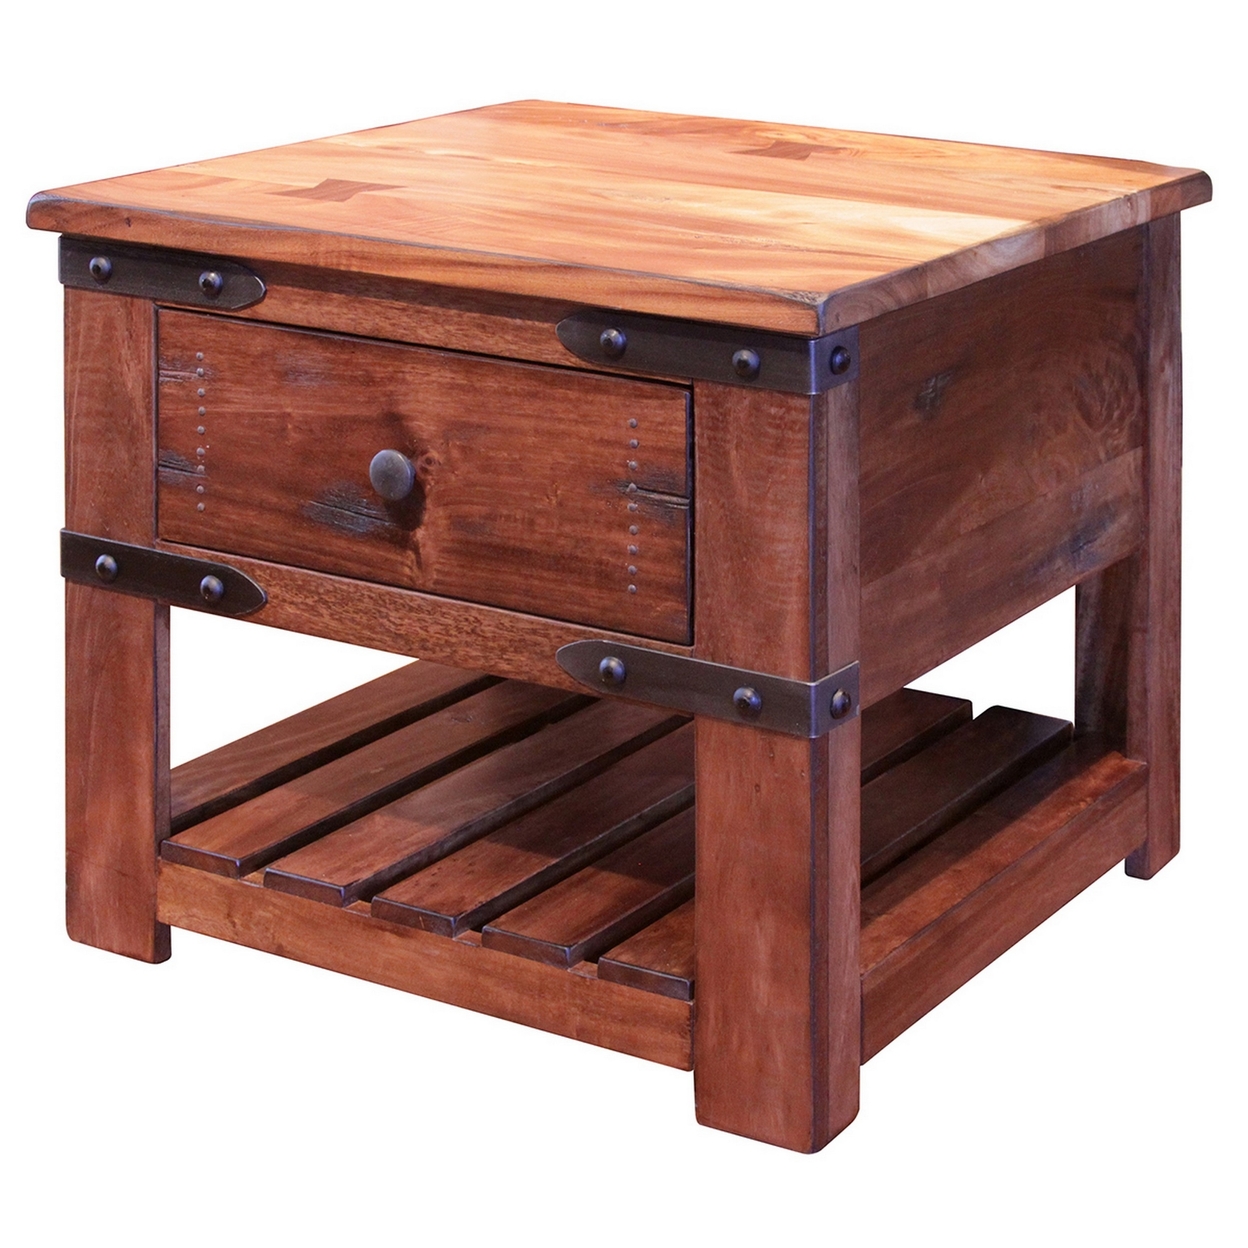 Umey 27 Inch 1 Drawer End Table, Slatted Shelf, Belt Accents, Brown Wood- Saltoro Sherpi